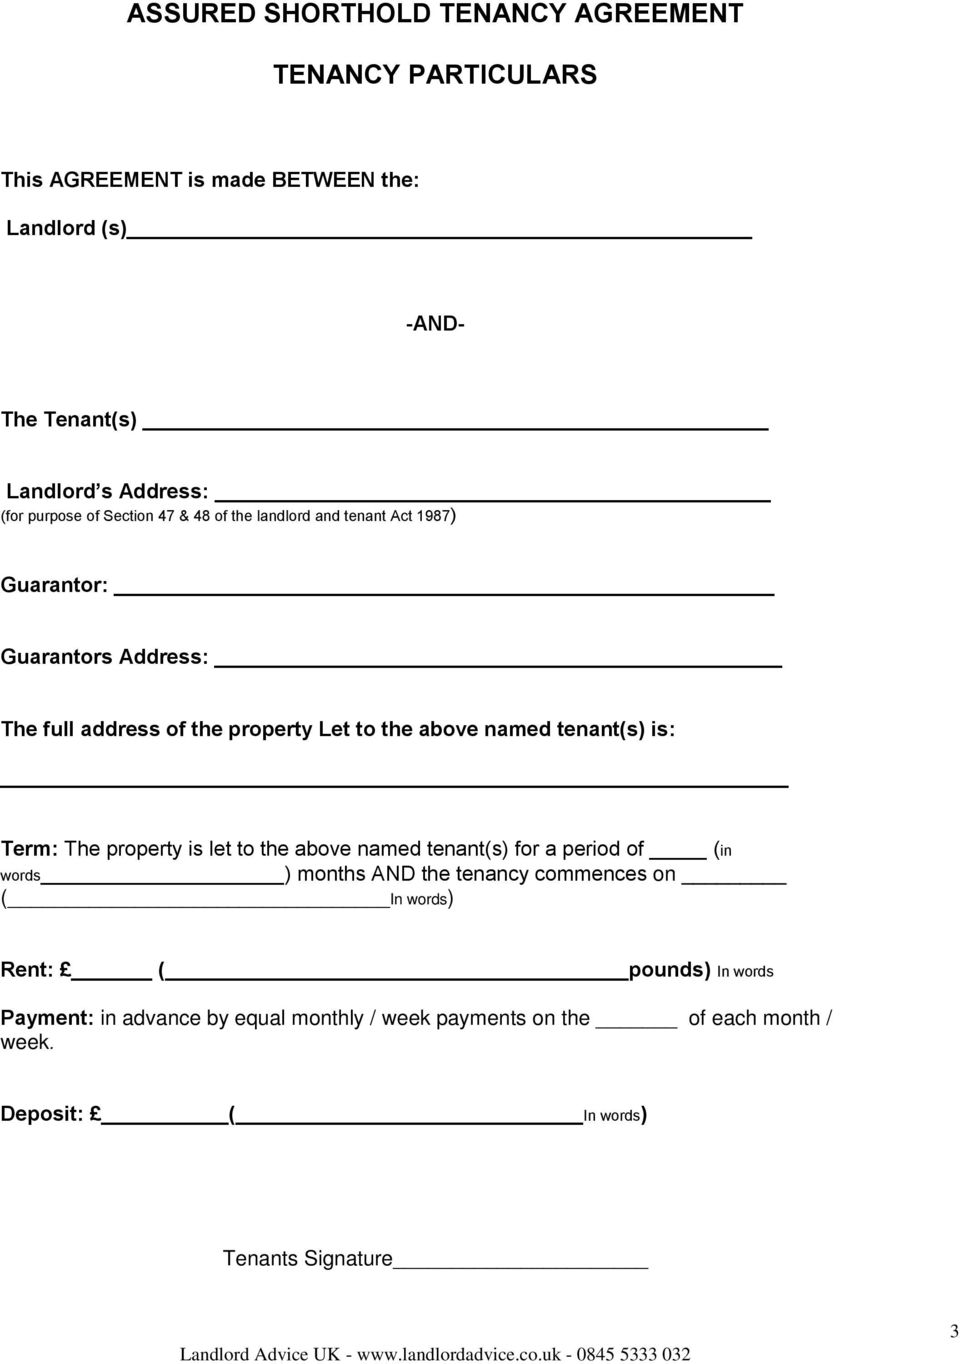 ASSURED SHORTHOLD TENANCY AGREEMENT - PDF Free Download With assured short term tenancy agreement template